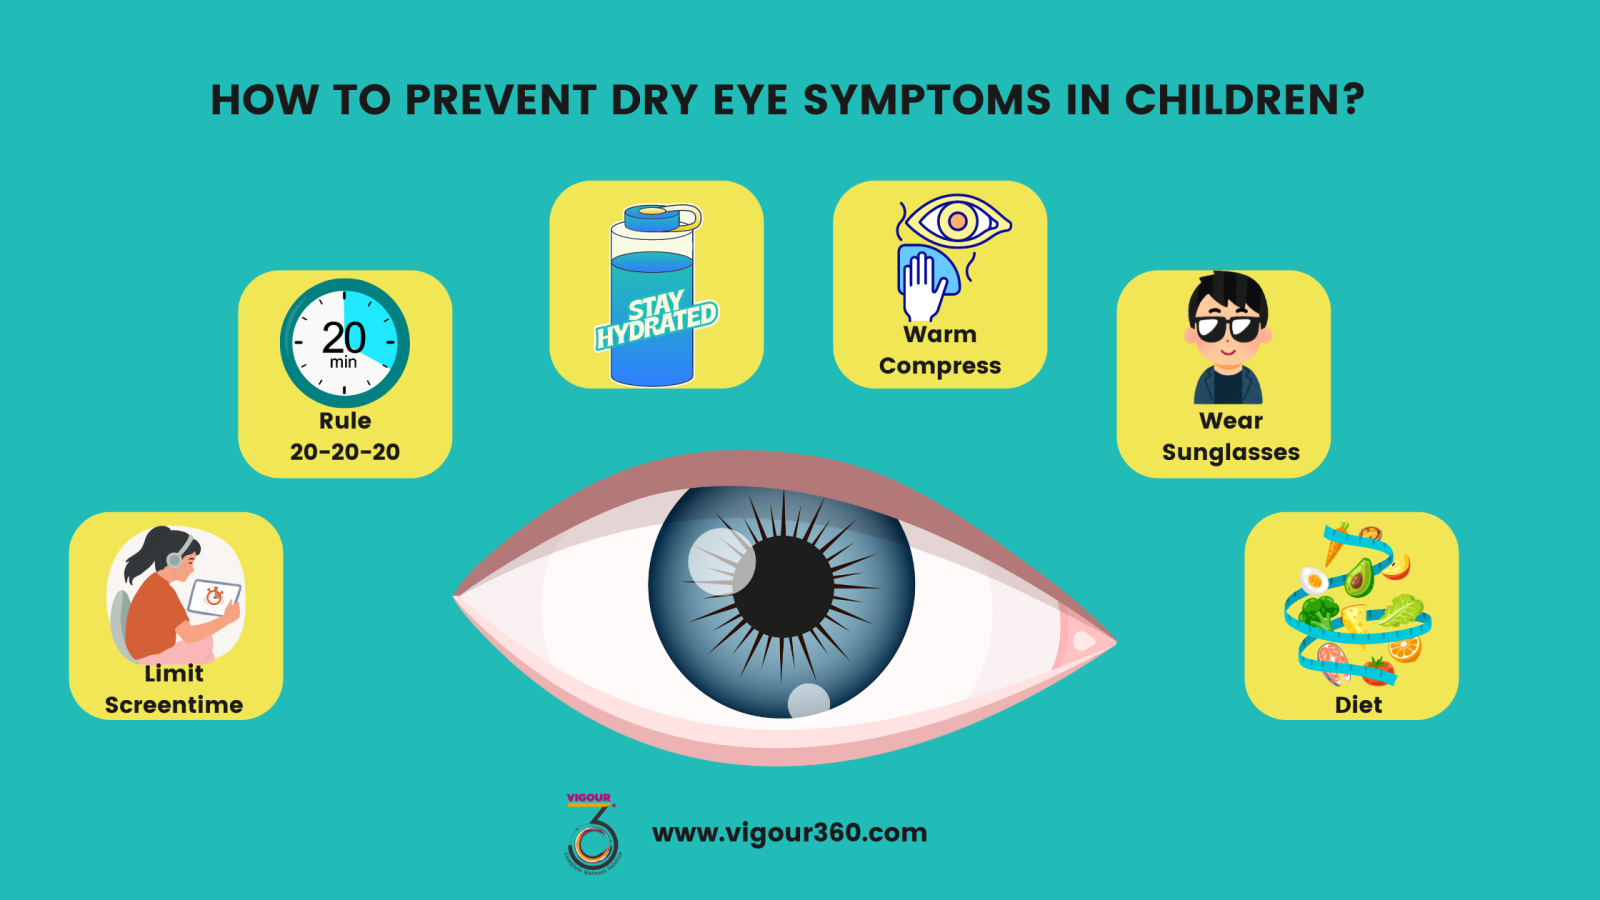 Dry Eyes in children